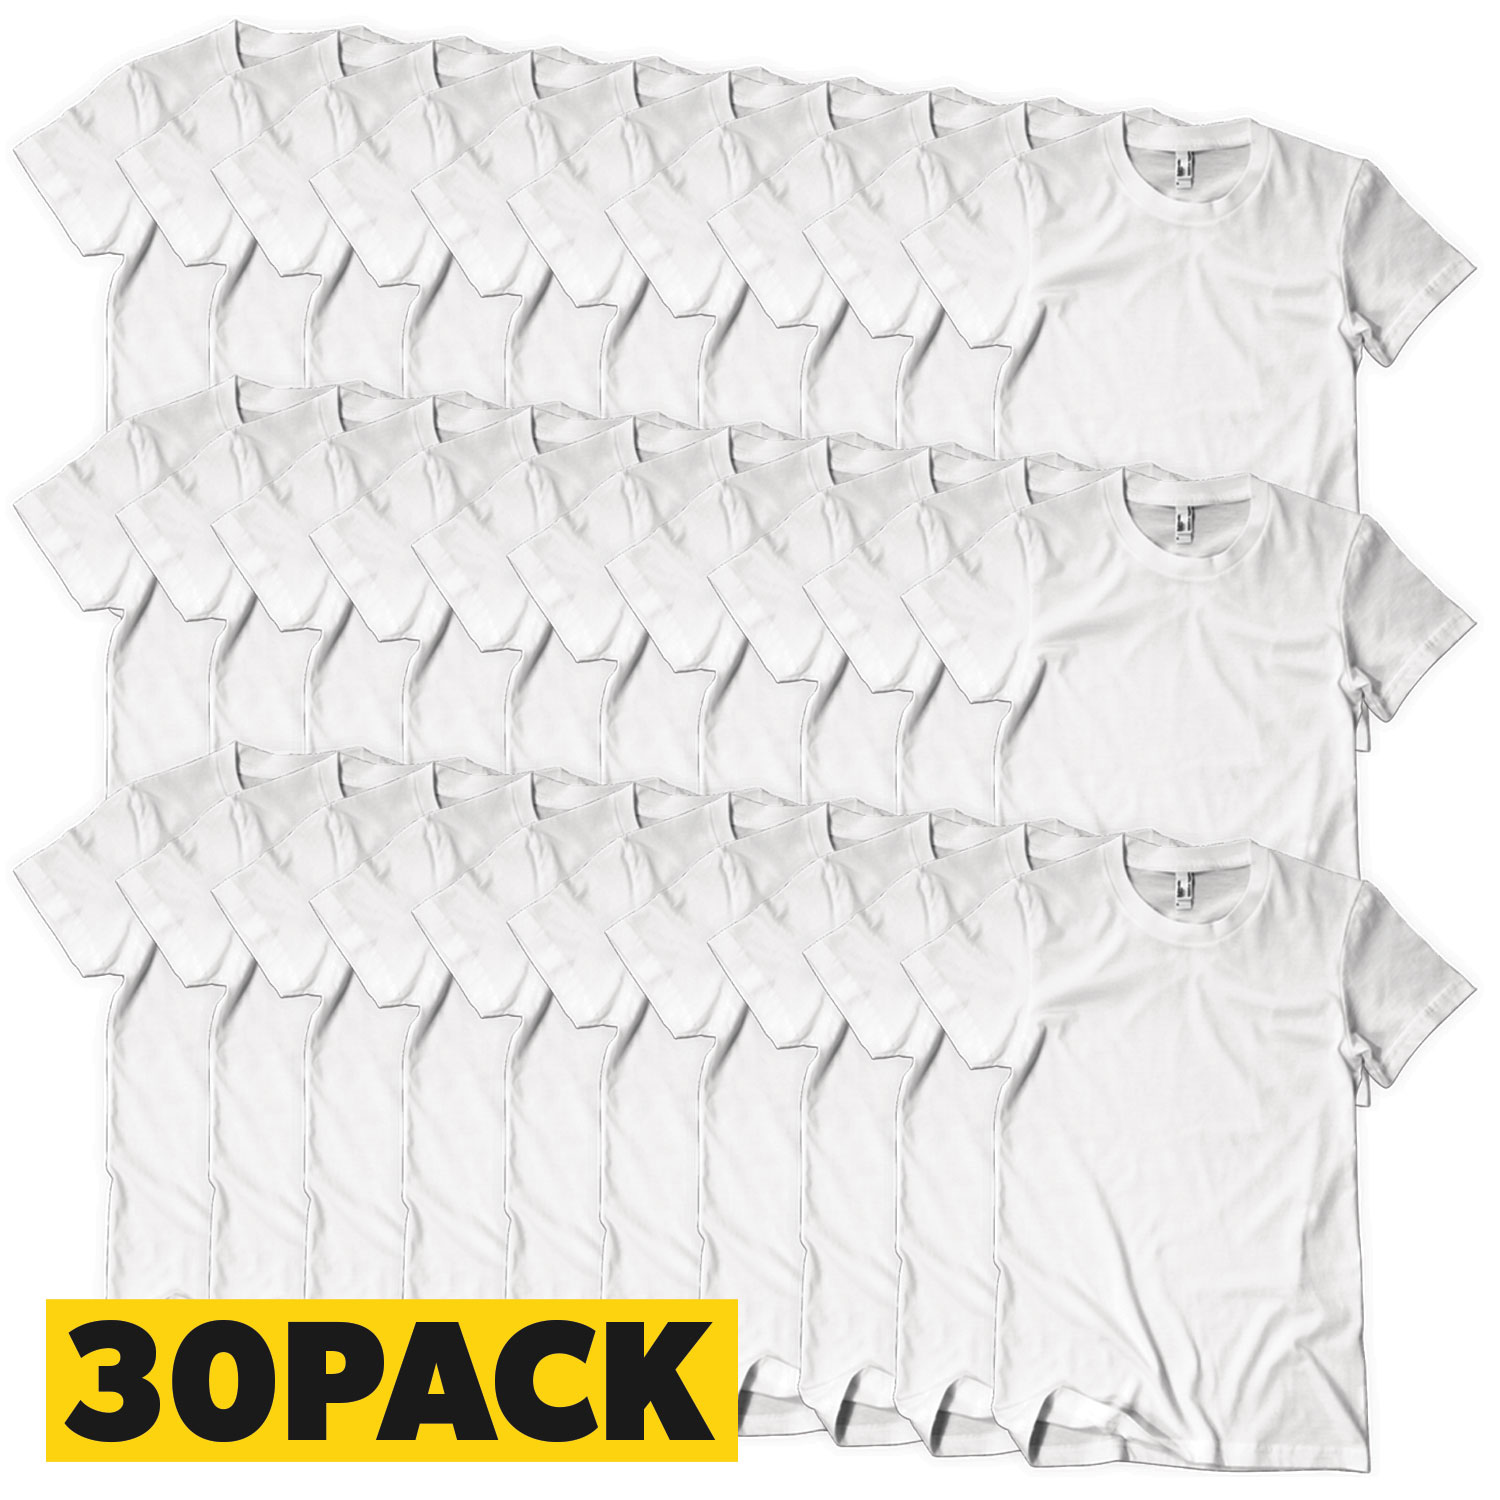 T-Shirts Megapack White - 30 pack